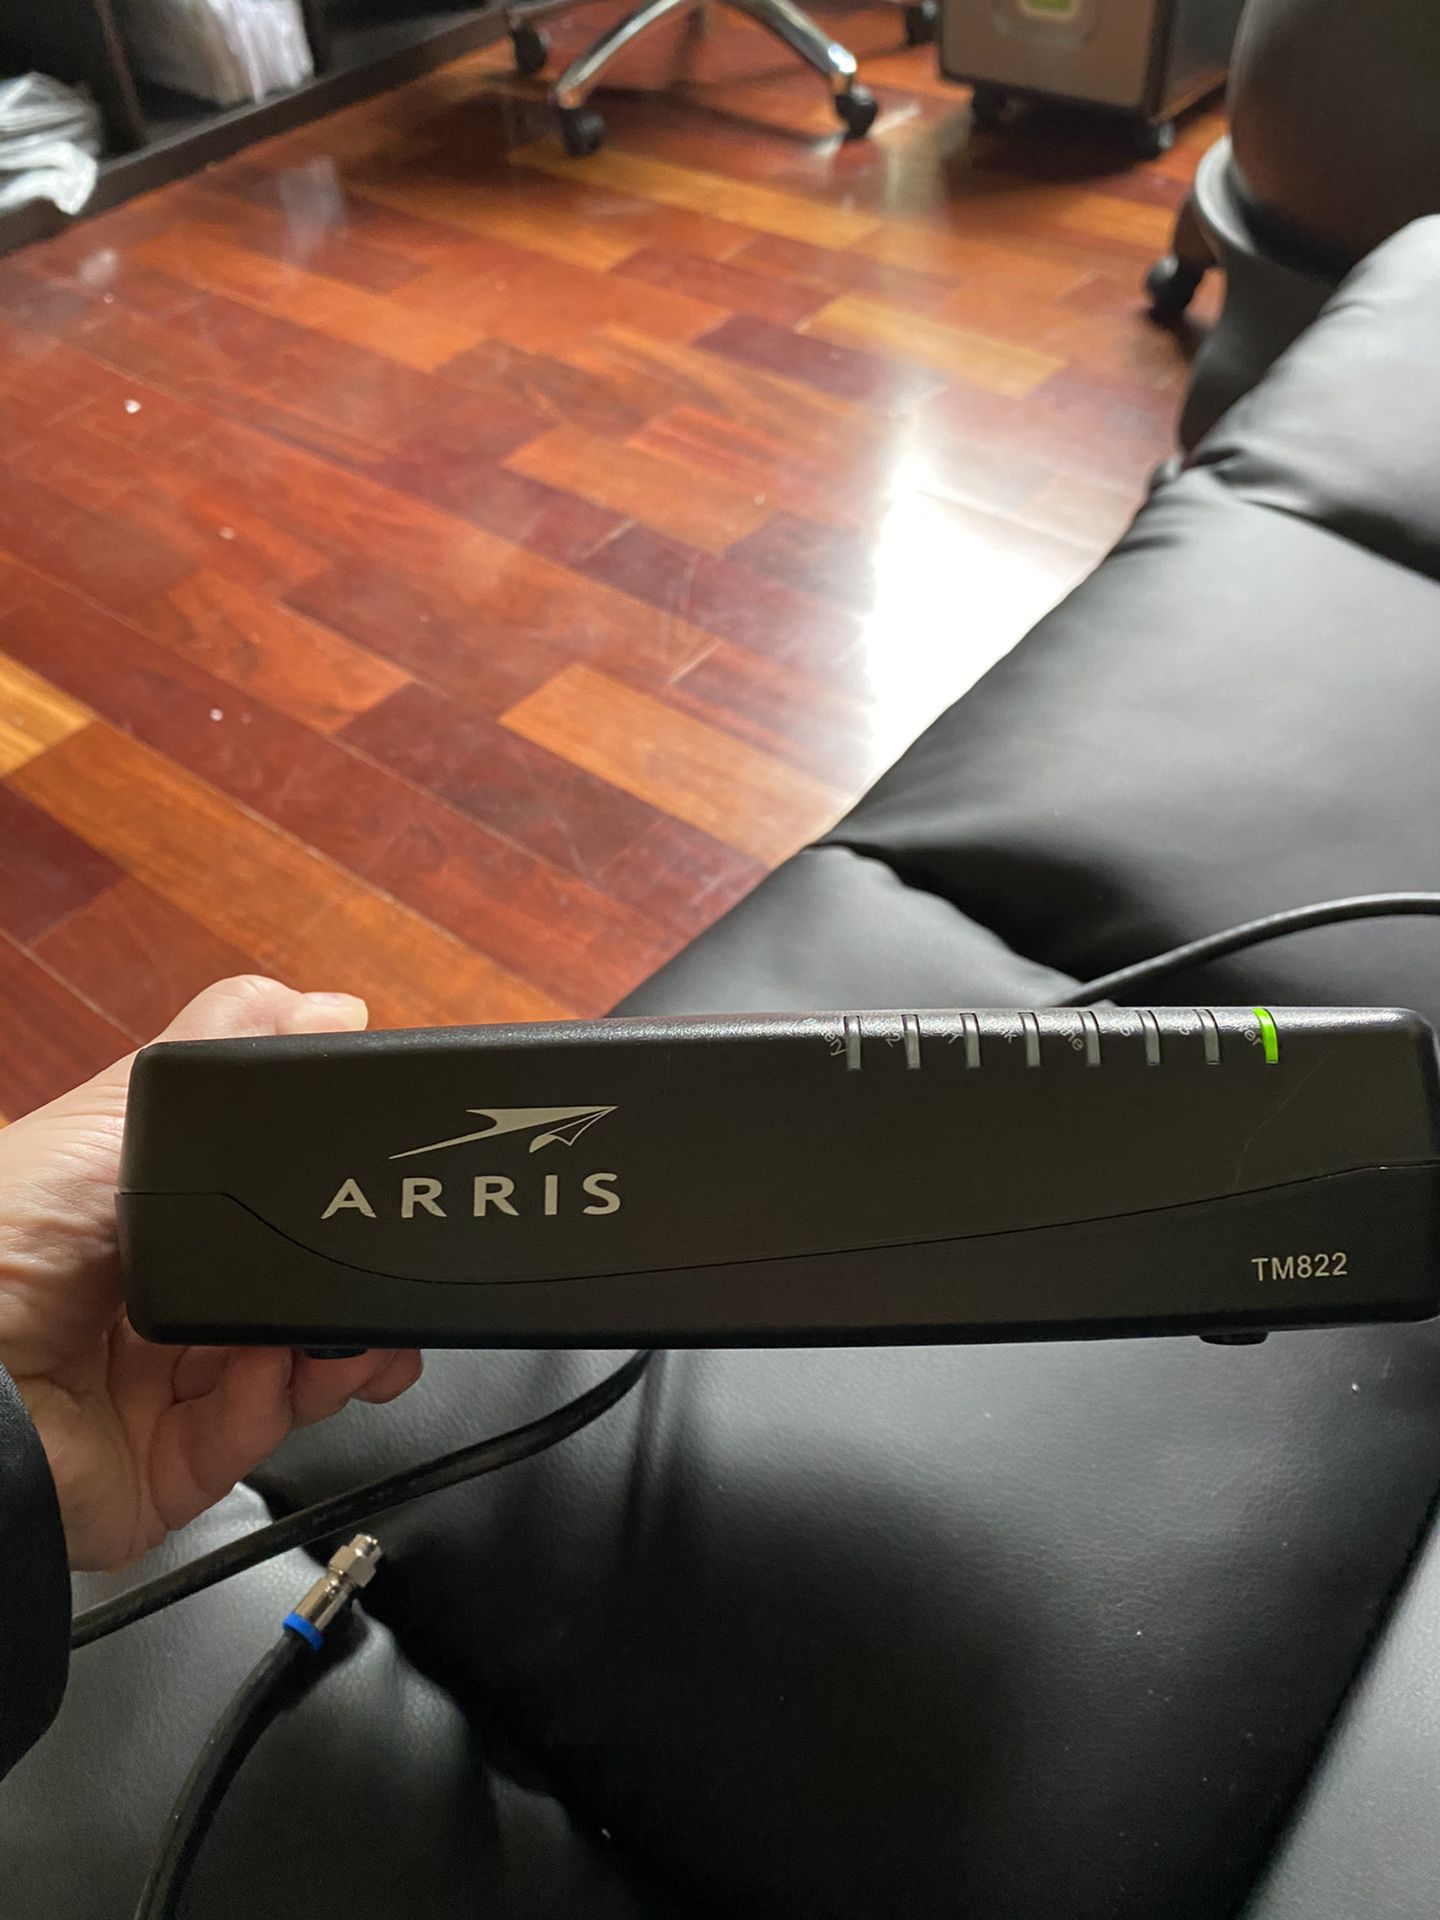 Arris modem Comparable with Comcast